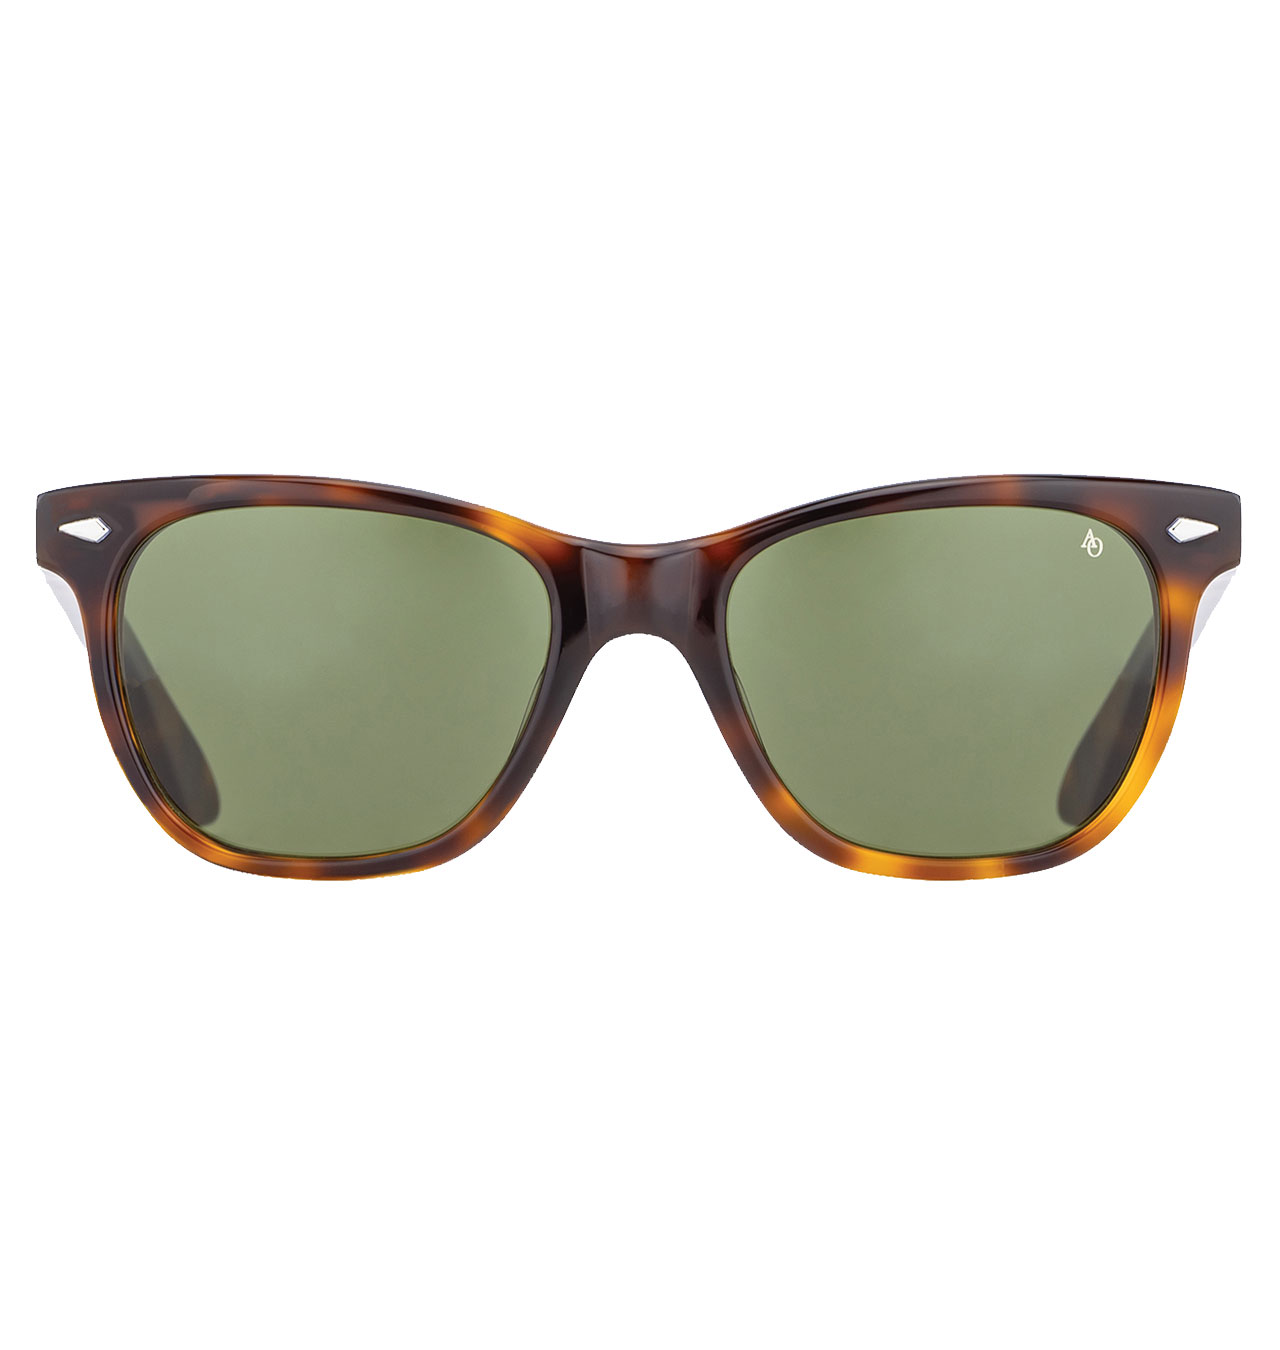 American Optical - Saratoga Sunglasses - Tortoise